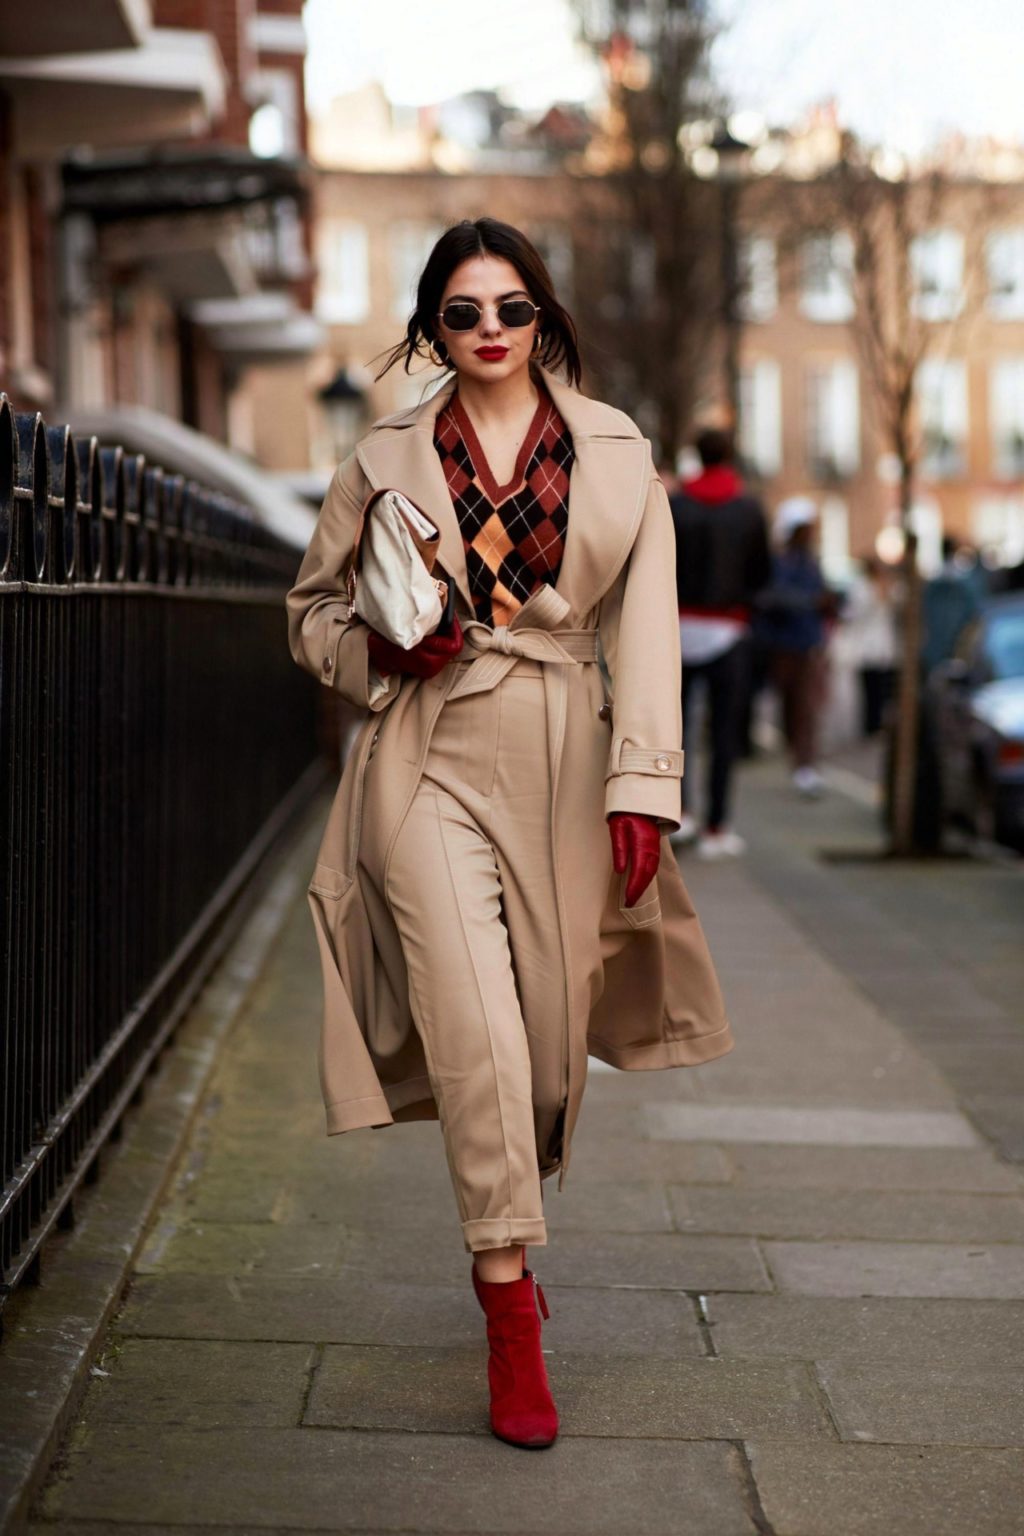 42 Impressive Fall Street Style Fashion For Women 2021 Vashionable